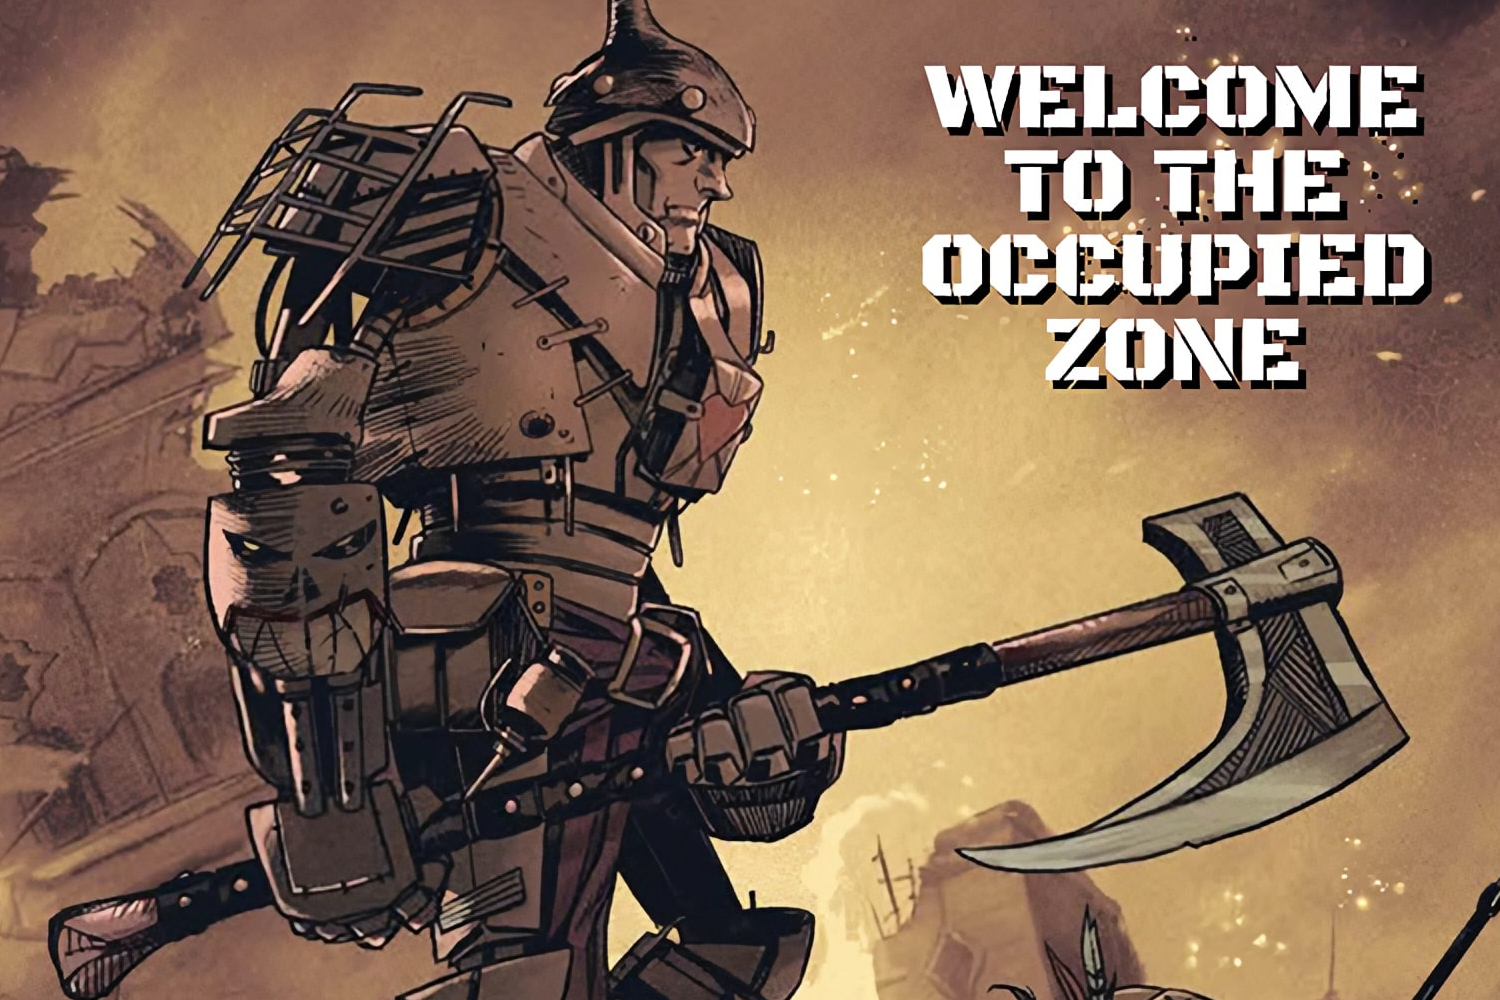 Kickstarter Alert: David Pepose discusses new comic series 'The O.Z.'